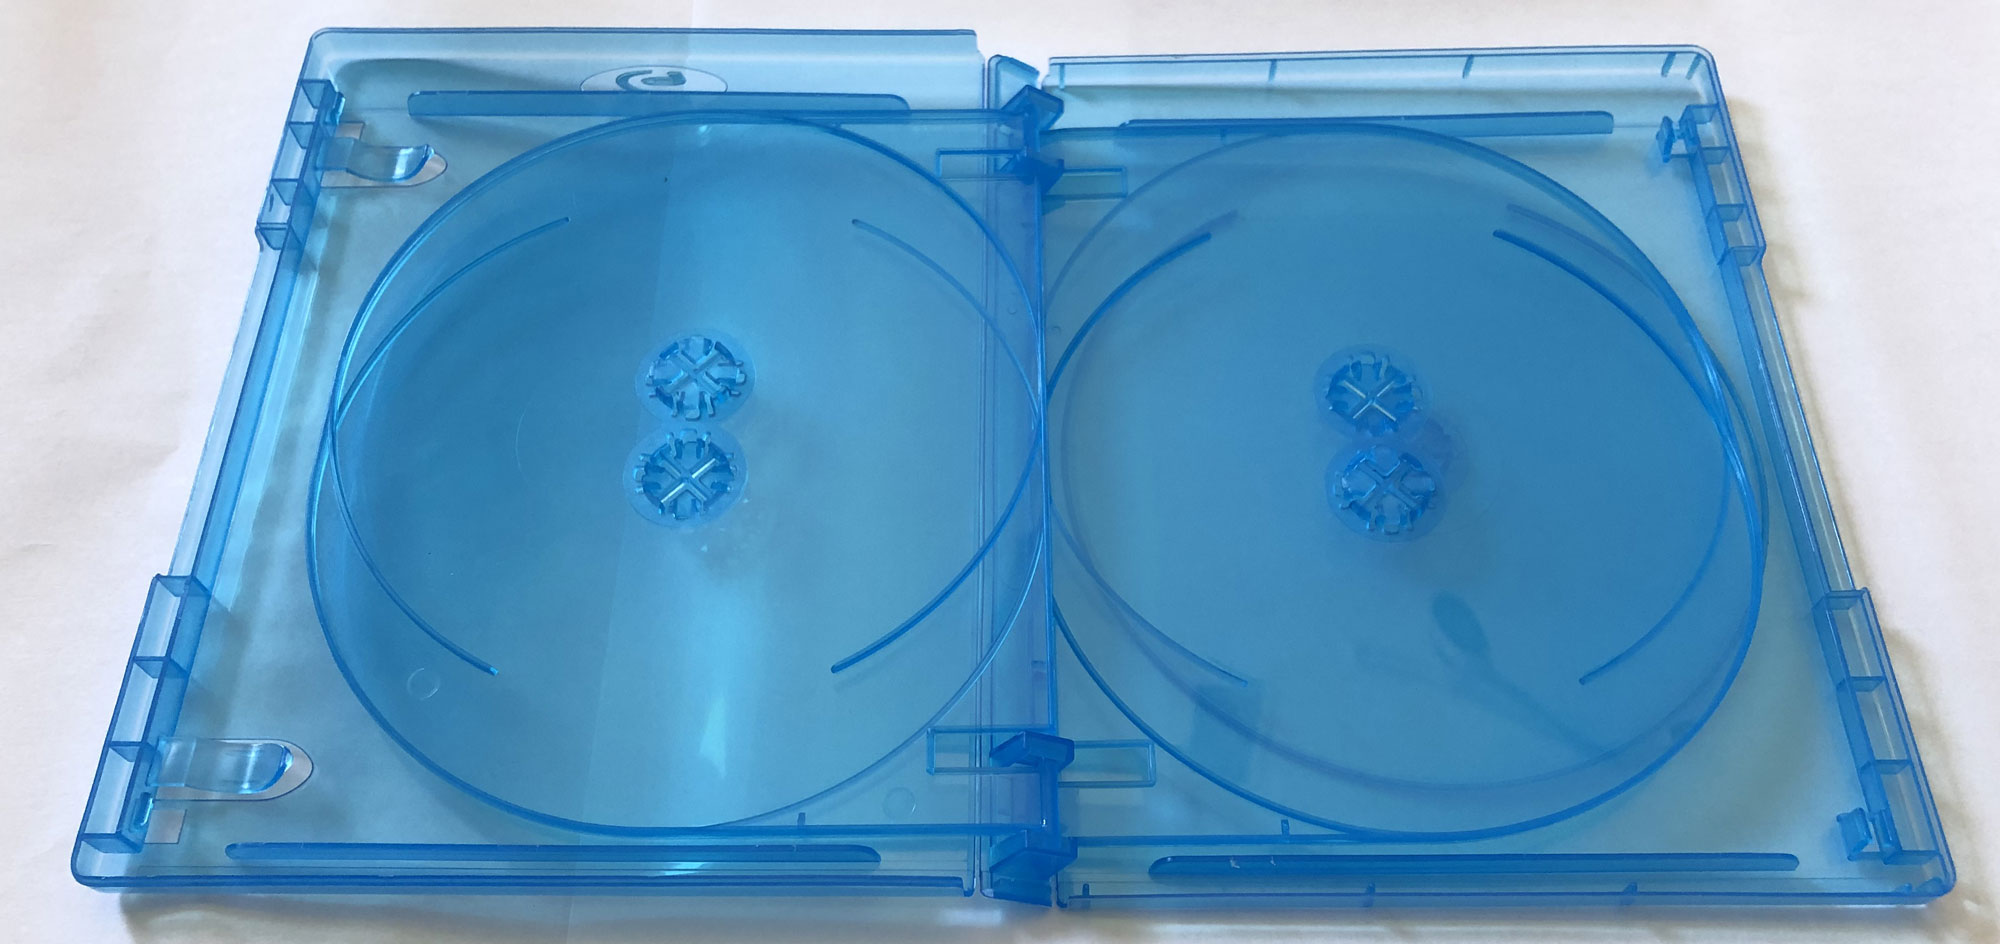 New 5 Pk MegaDisc Blu-Ray Multi 5 Discs case 15 mm Tray Storage Box High Quality Free Shipping